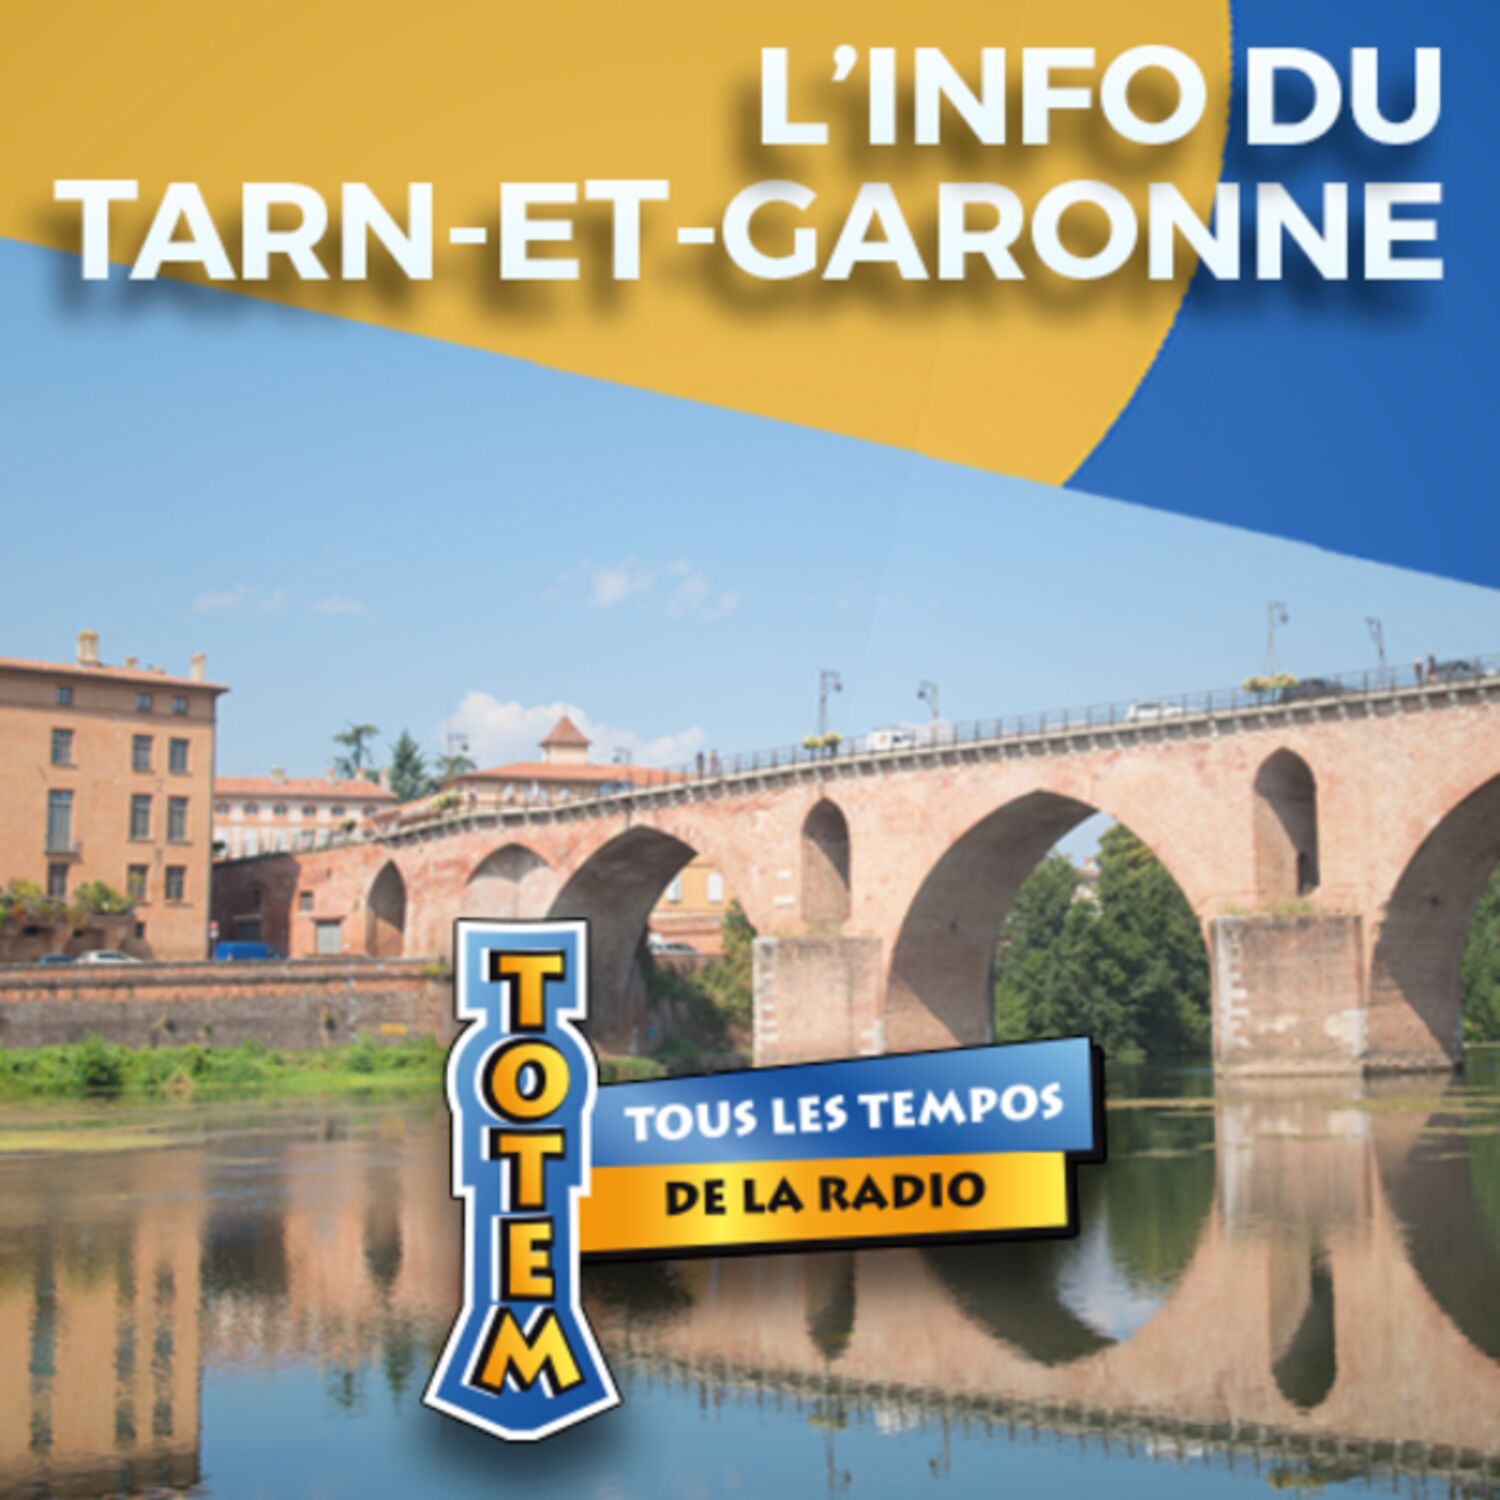 L'info du Tarn-et-Garonne du 10/05/23 à 07h00